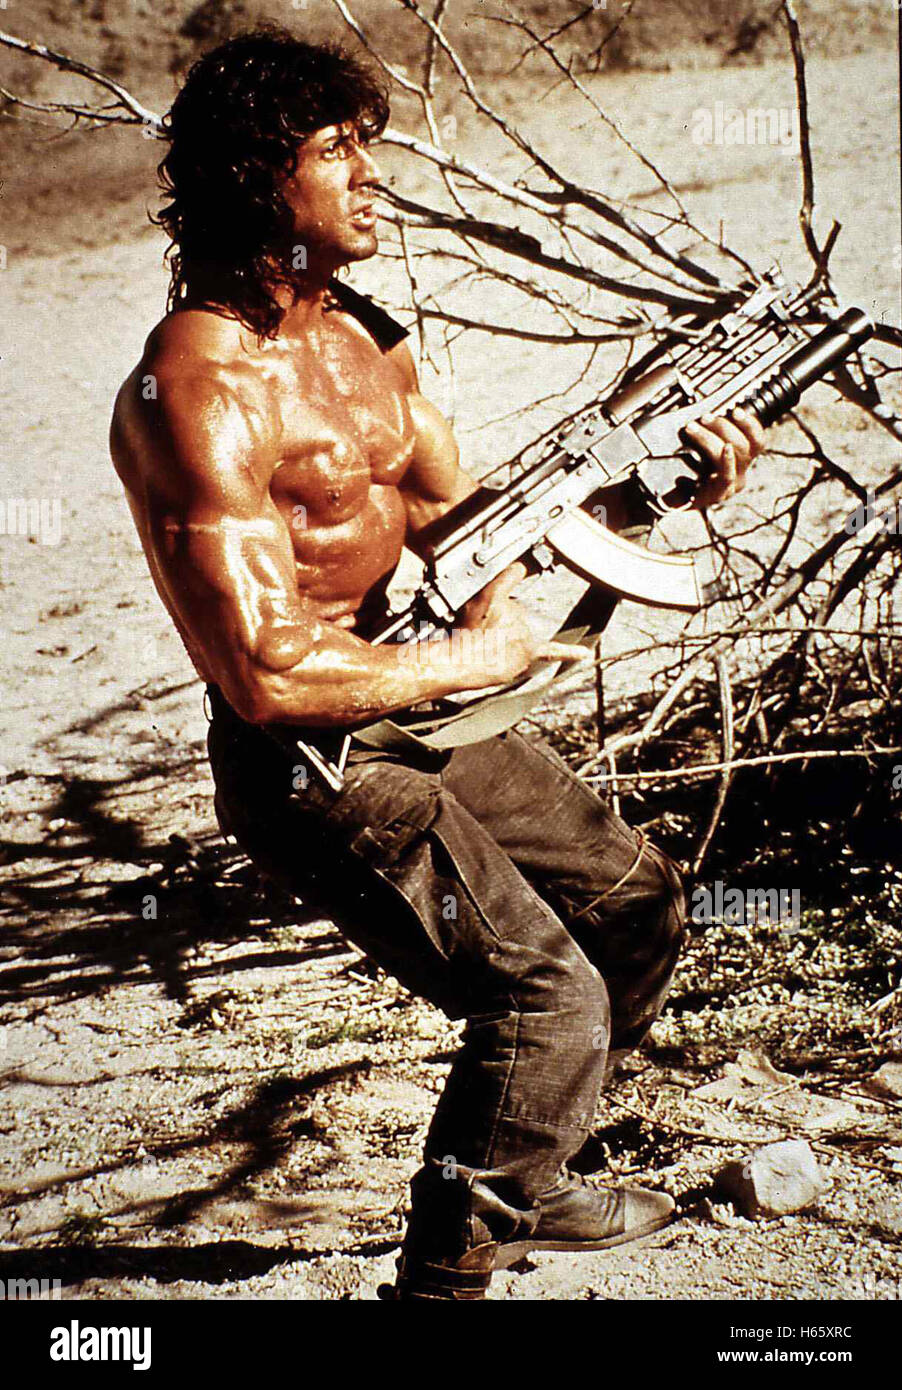 Rambo III (1988), Rambo 3, Director: Peter MacDonald, Actors/Stars: Sylvester Stallone, Richard Crenna, Marc de Jonge Stock Photo